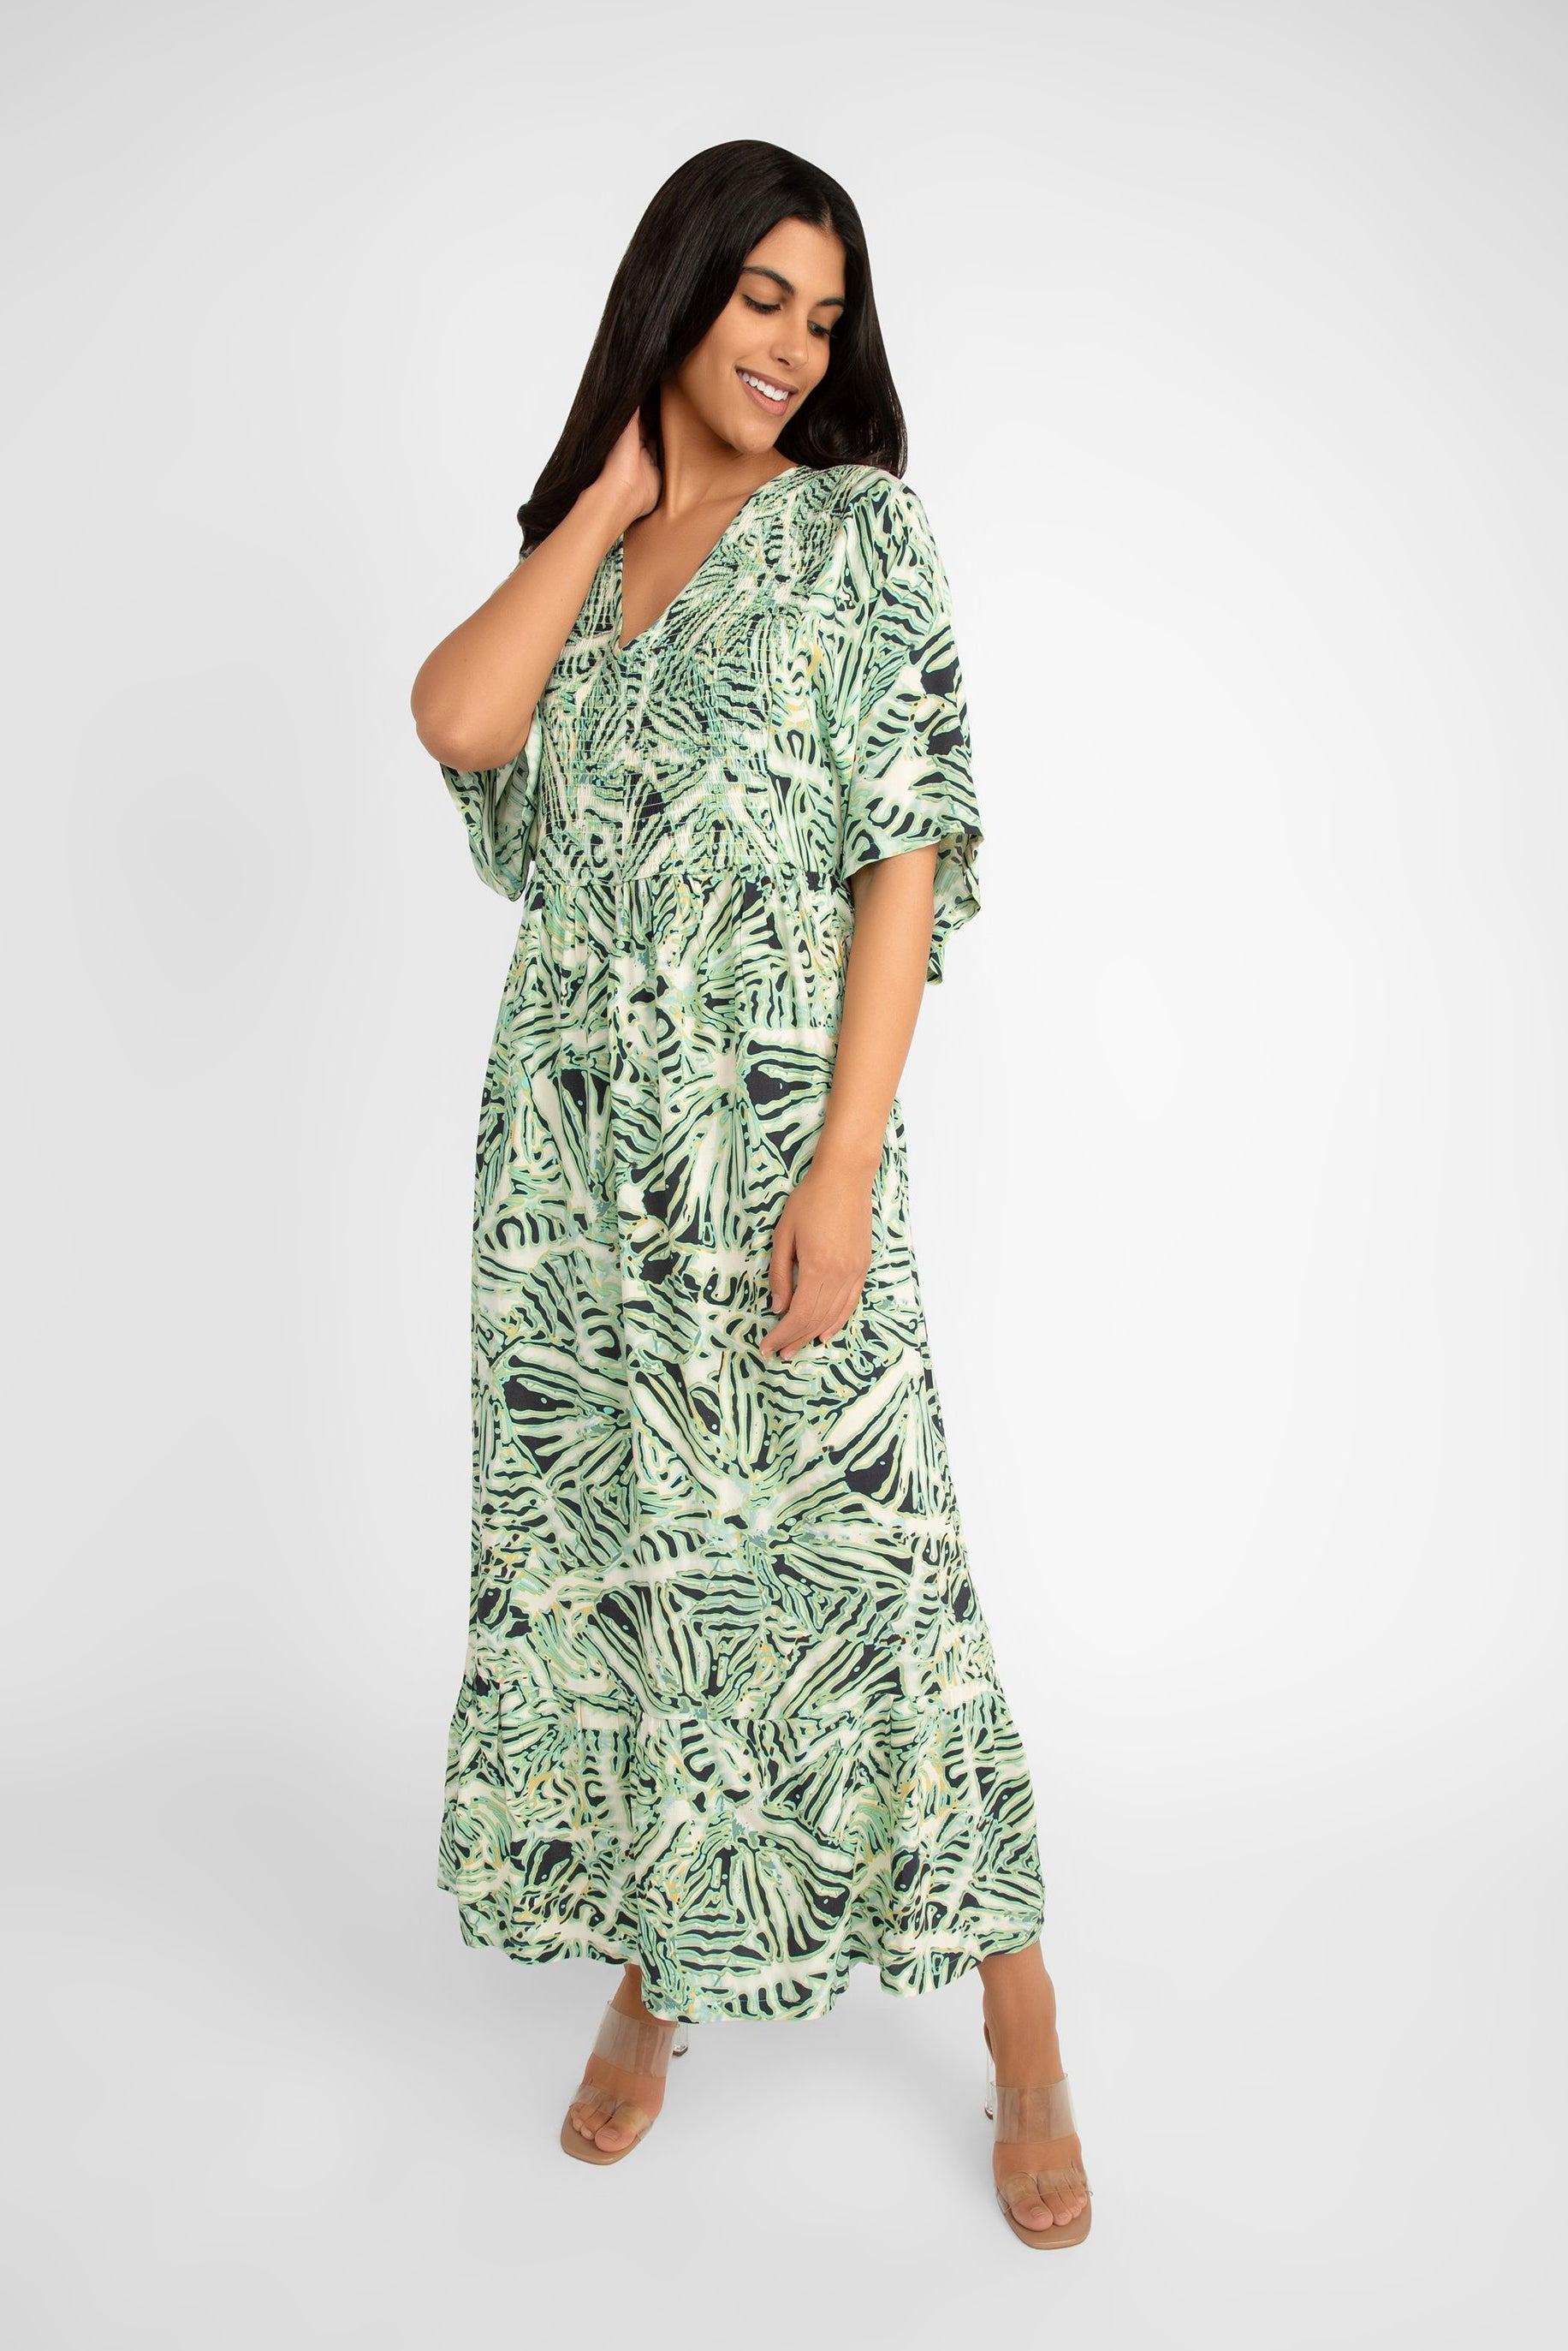 Soya Concept (40629) Women's Short Sleeve Aqua Foliage Printed Maxi Dress with V-neck and smocked bodice